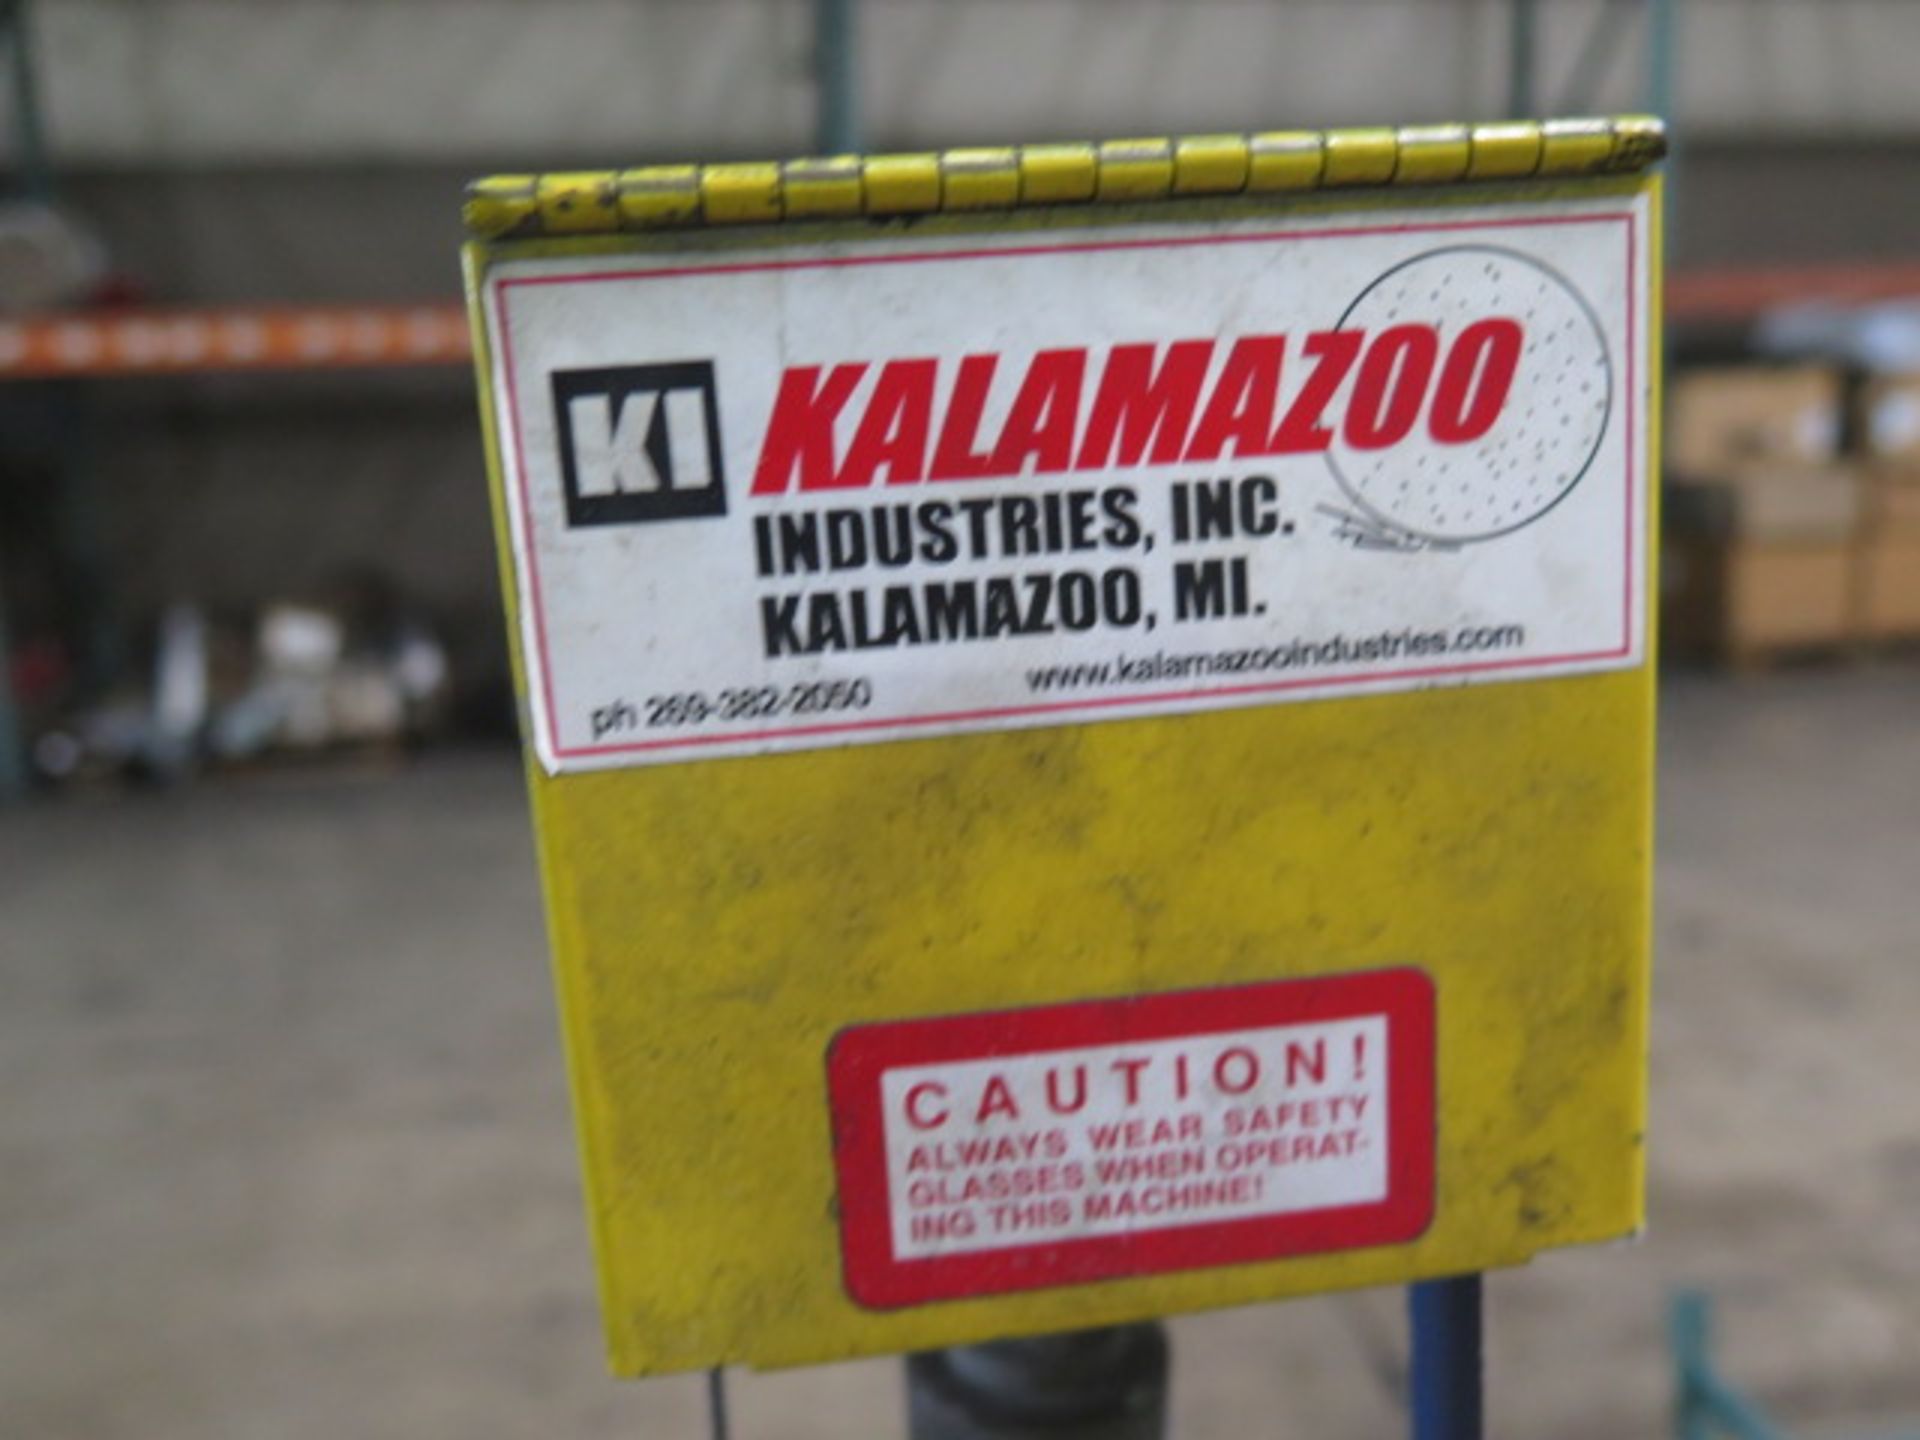 Kalamazoo 1” Pedestal Belt Sander, SOLD AS IS WITH NO WARRANTY - Image 4 of 4